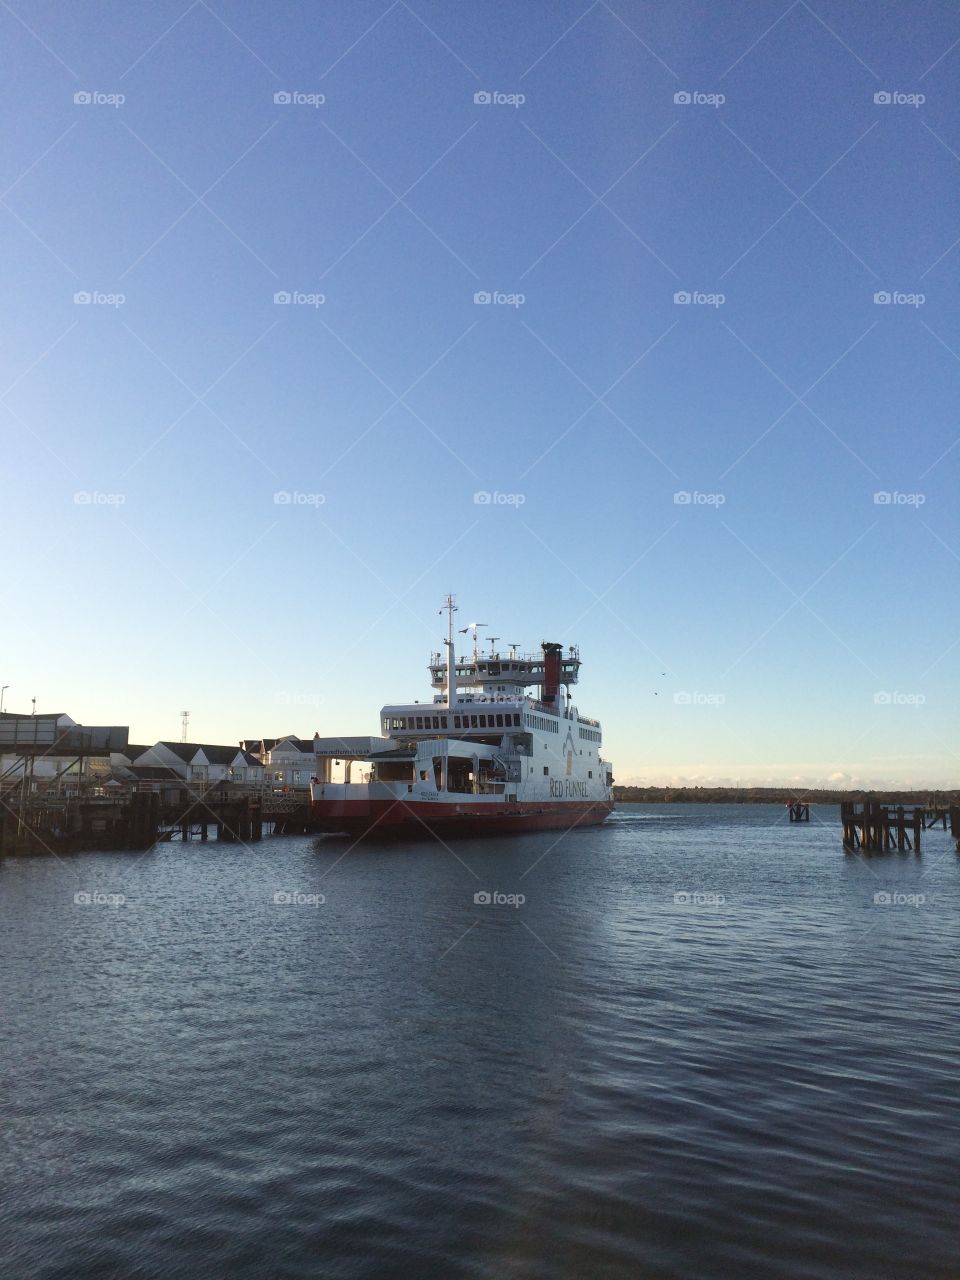 Southampton ferry